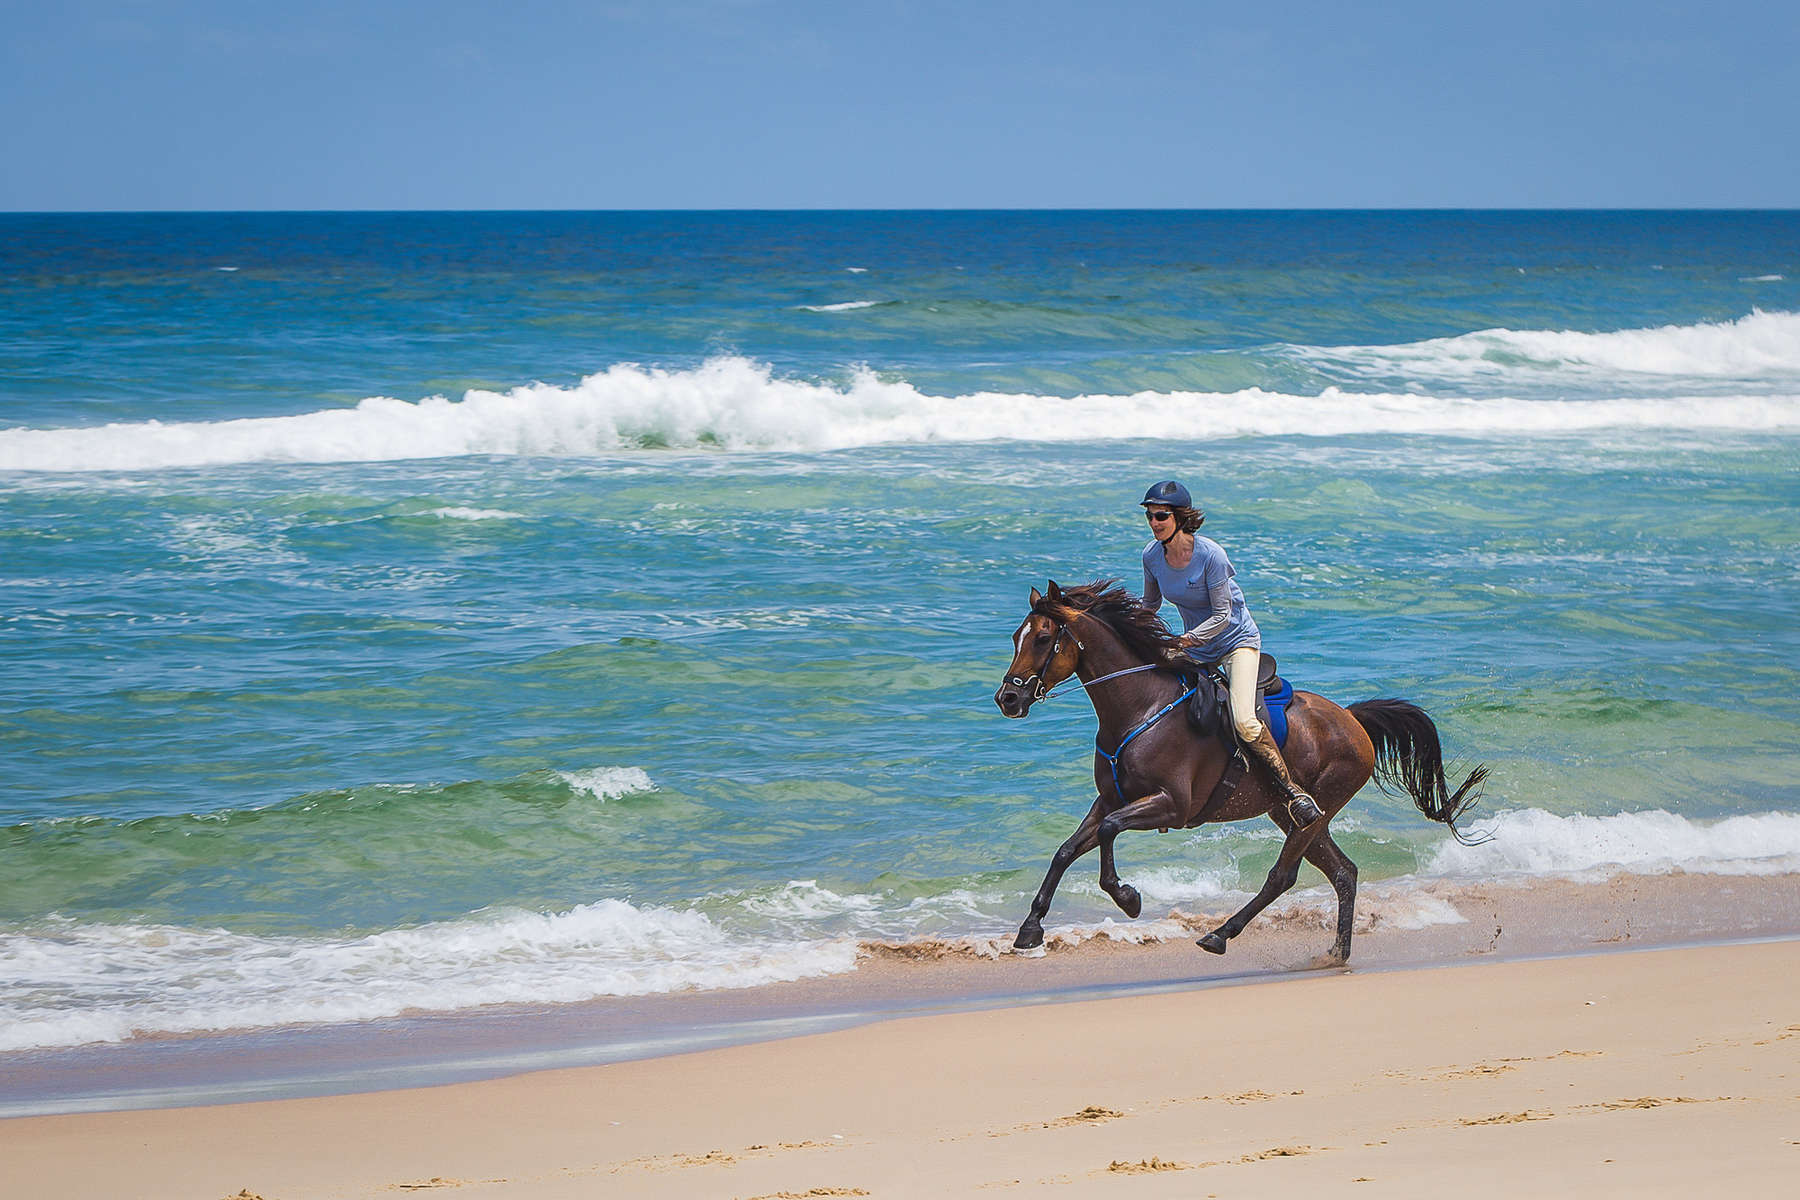 Rider cantering on an Australian beach on an Arabian horse